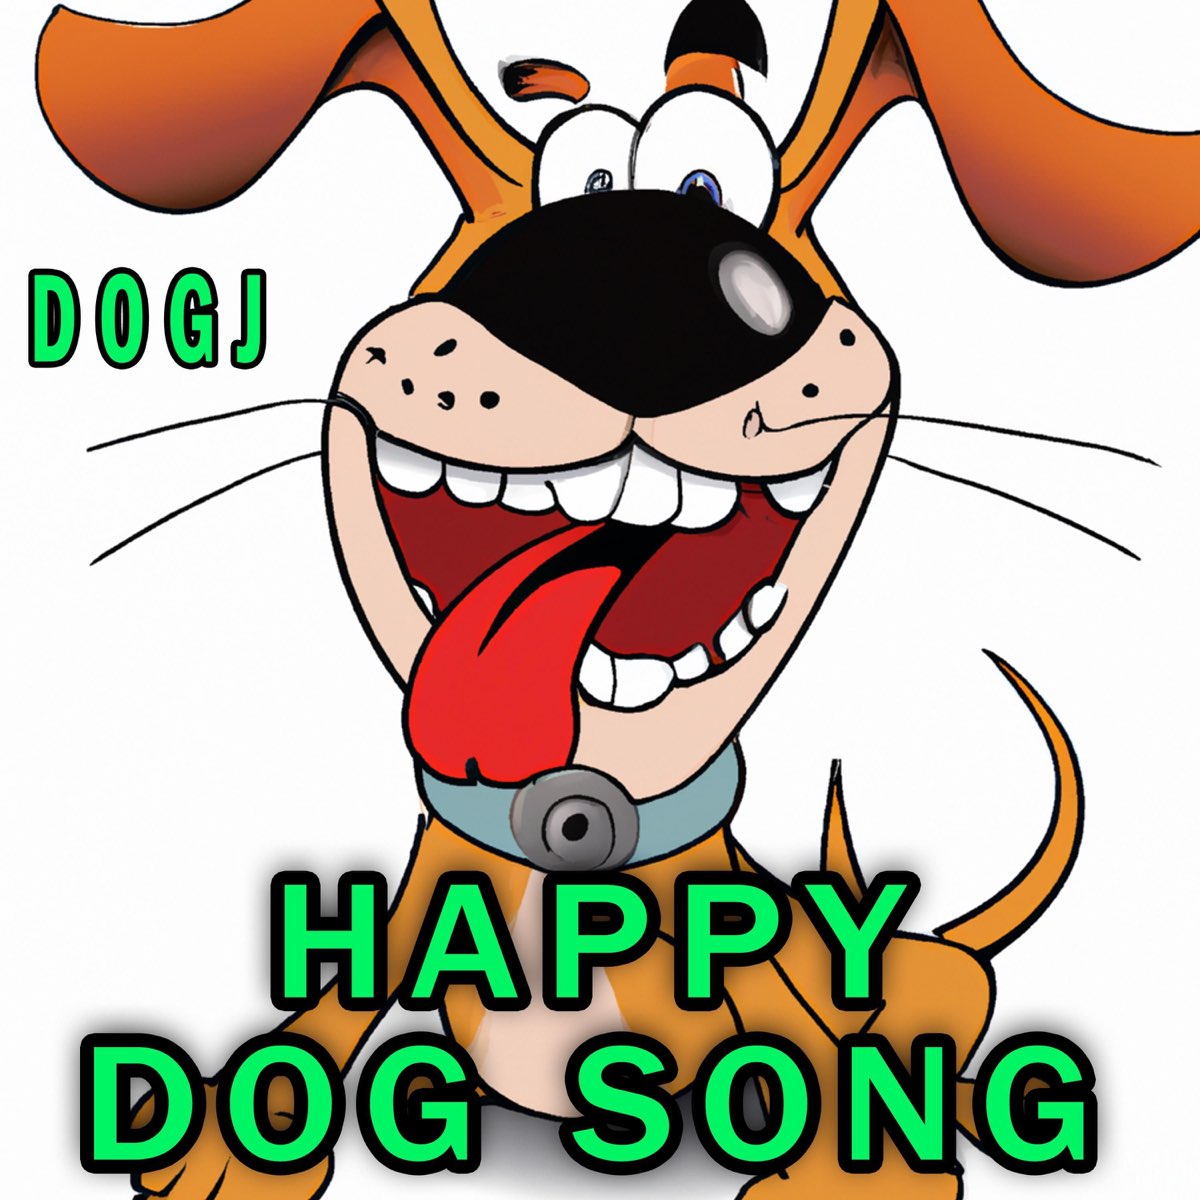 Happy Dog Song - Single - Album by Dogj - Apple Music